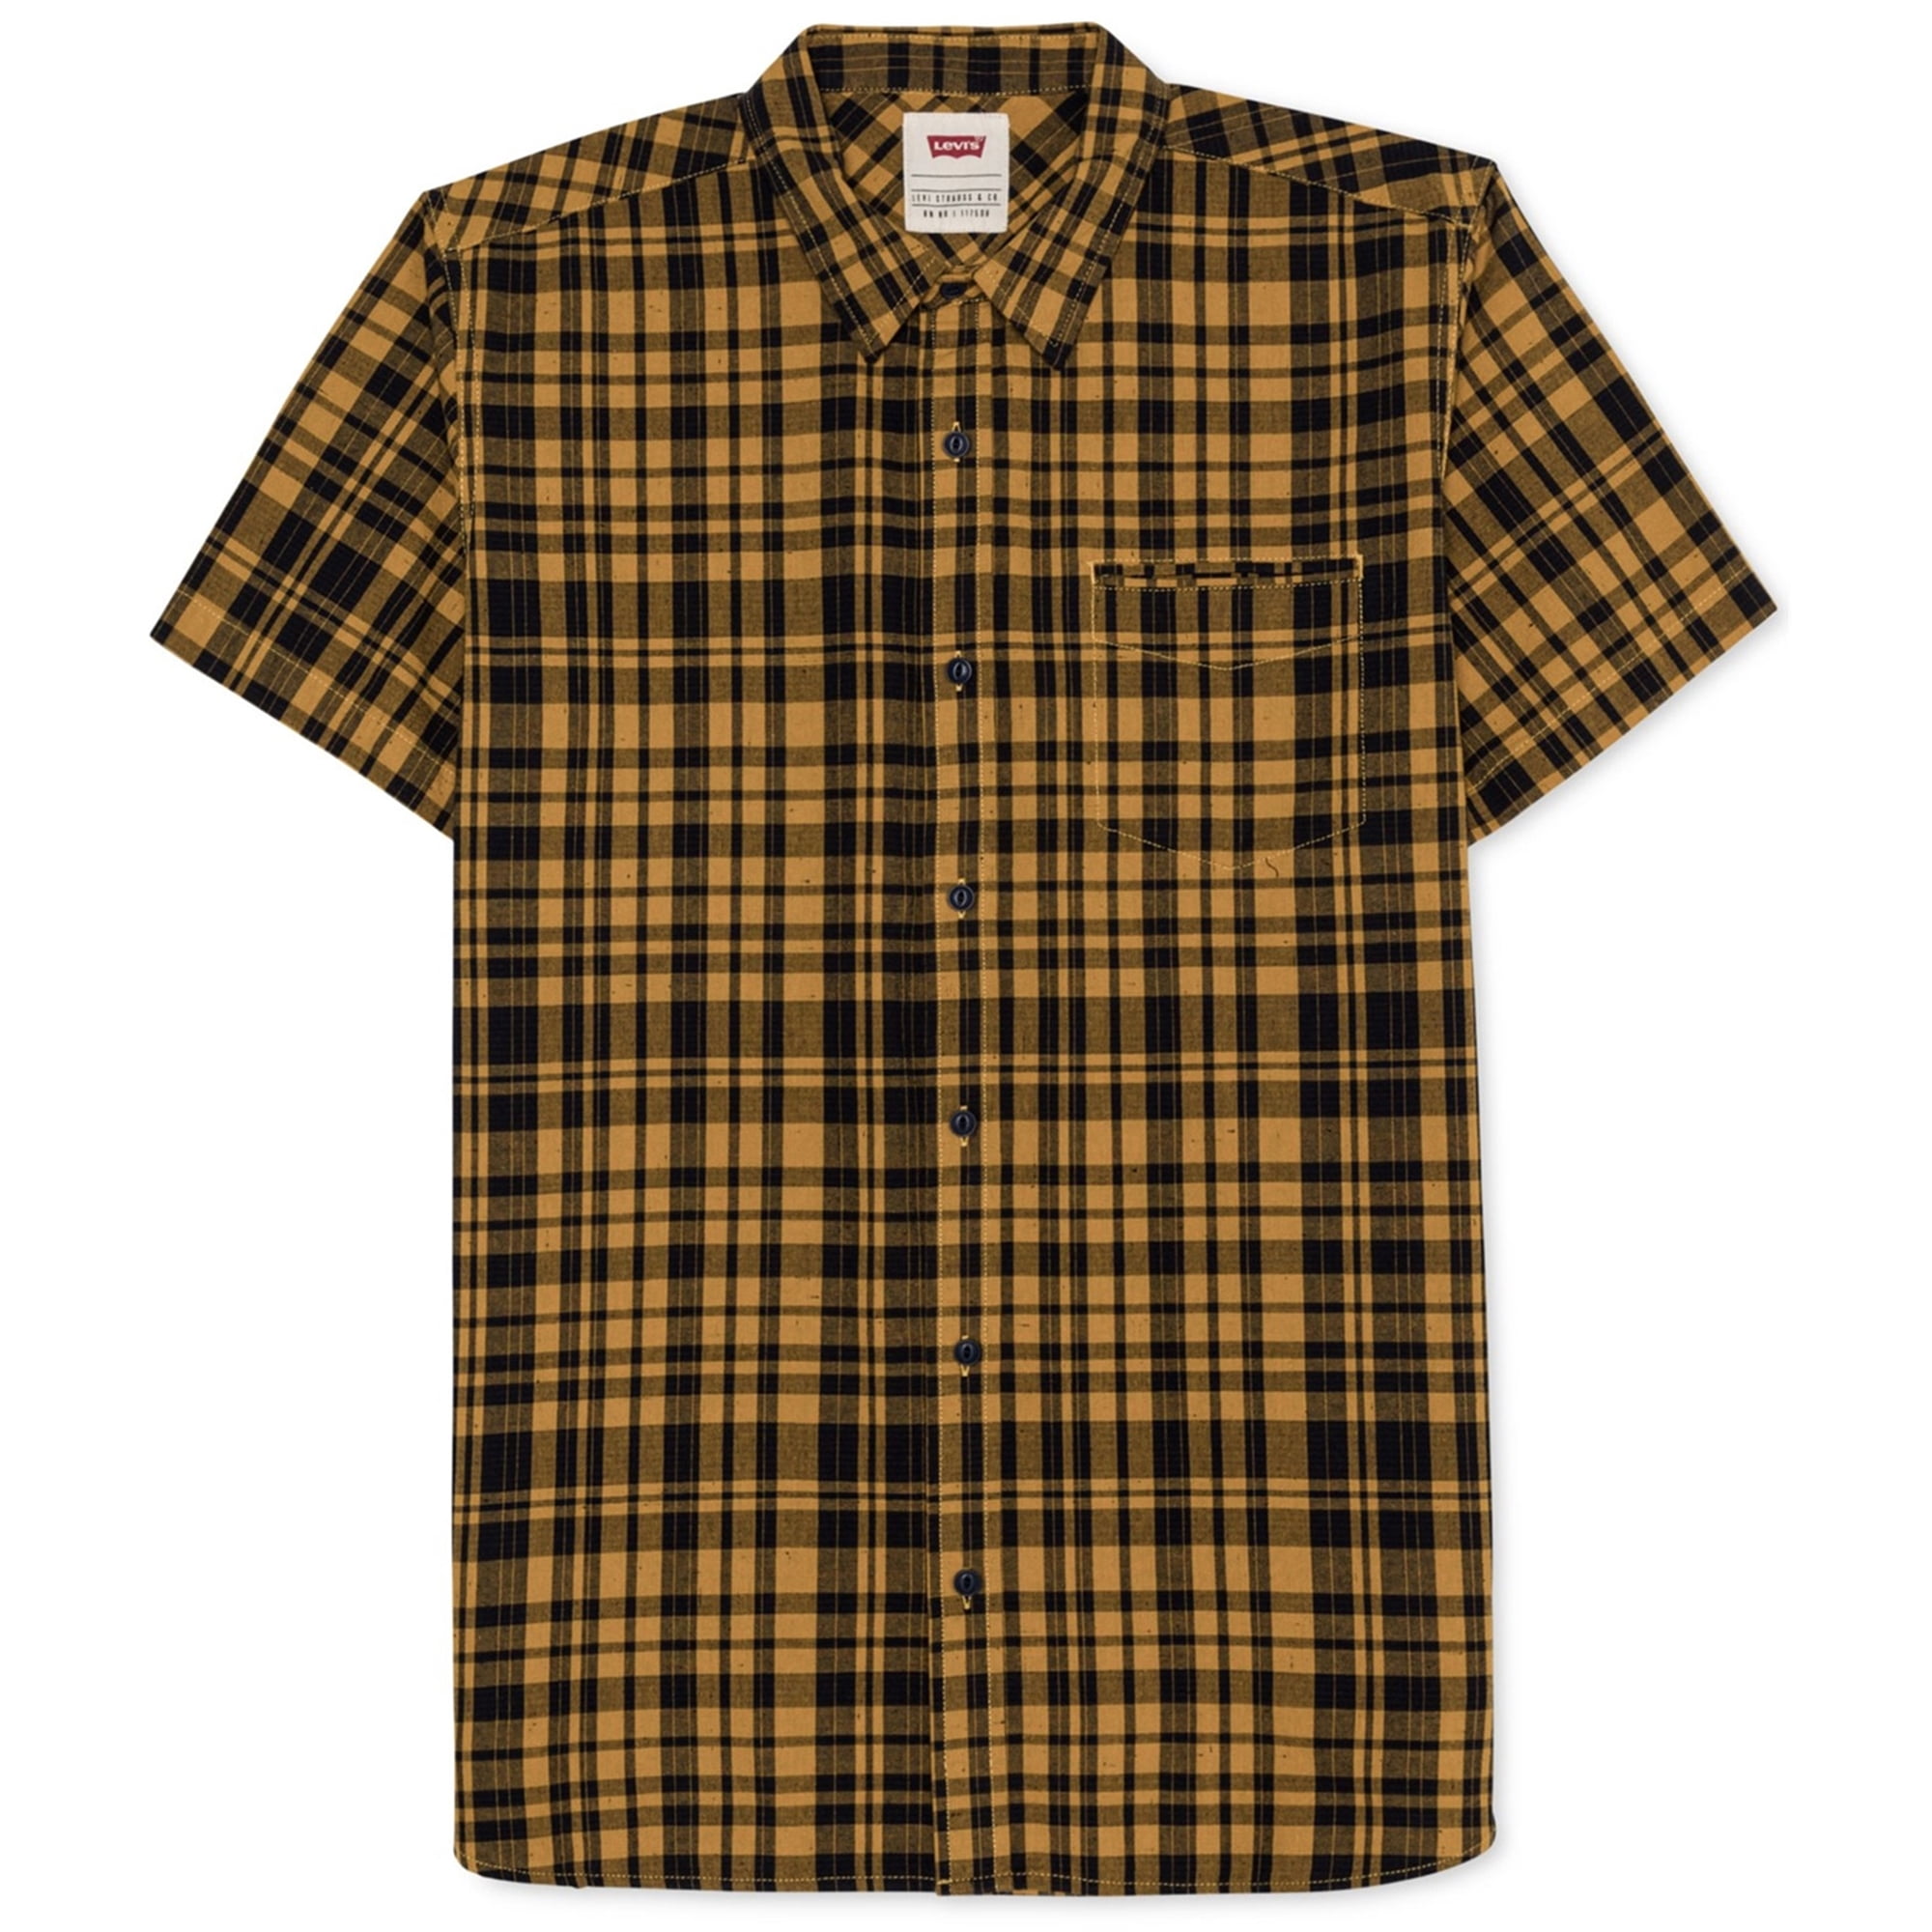 Levi's Mens Rulo Button Up Shirt, Yellow, Large - Walmart.com